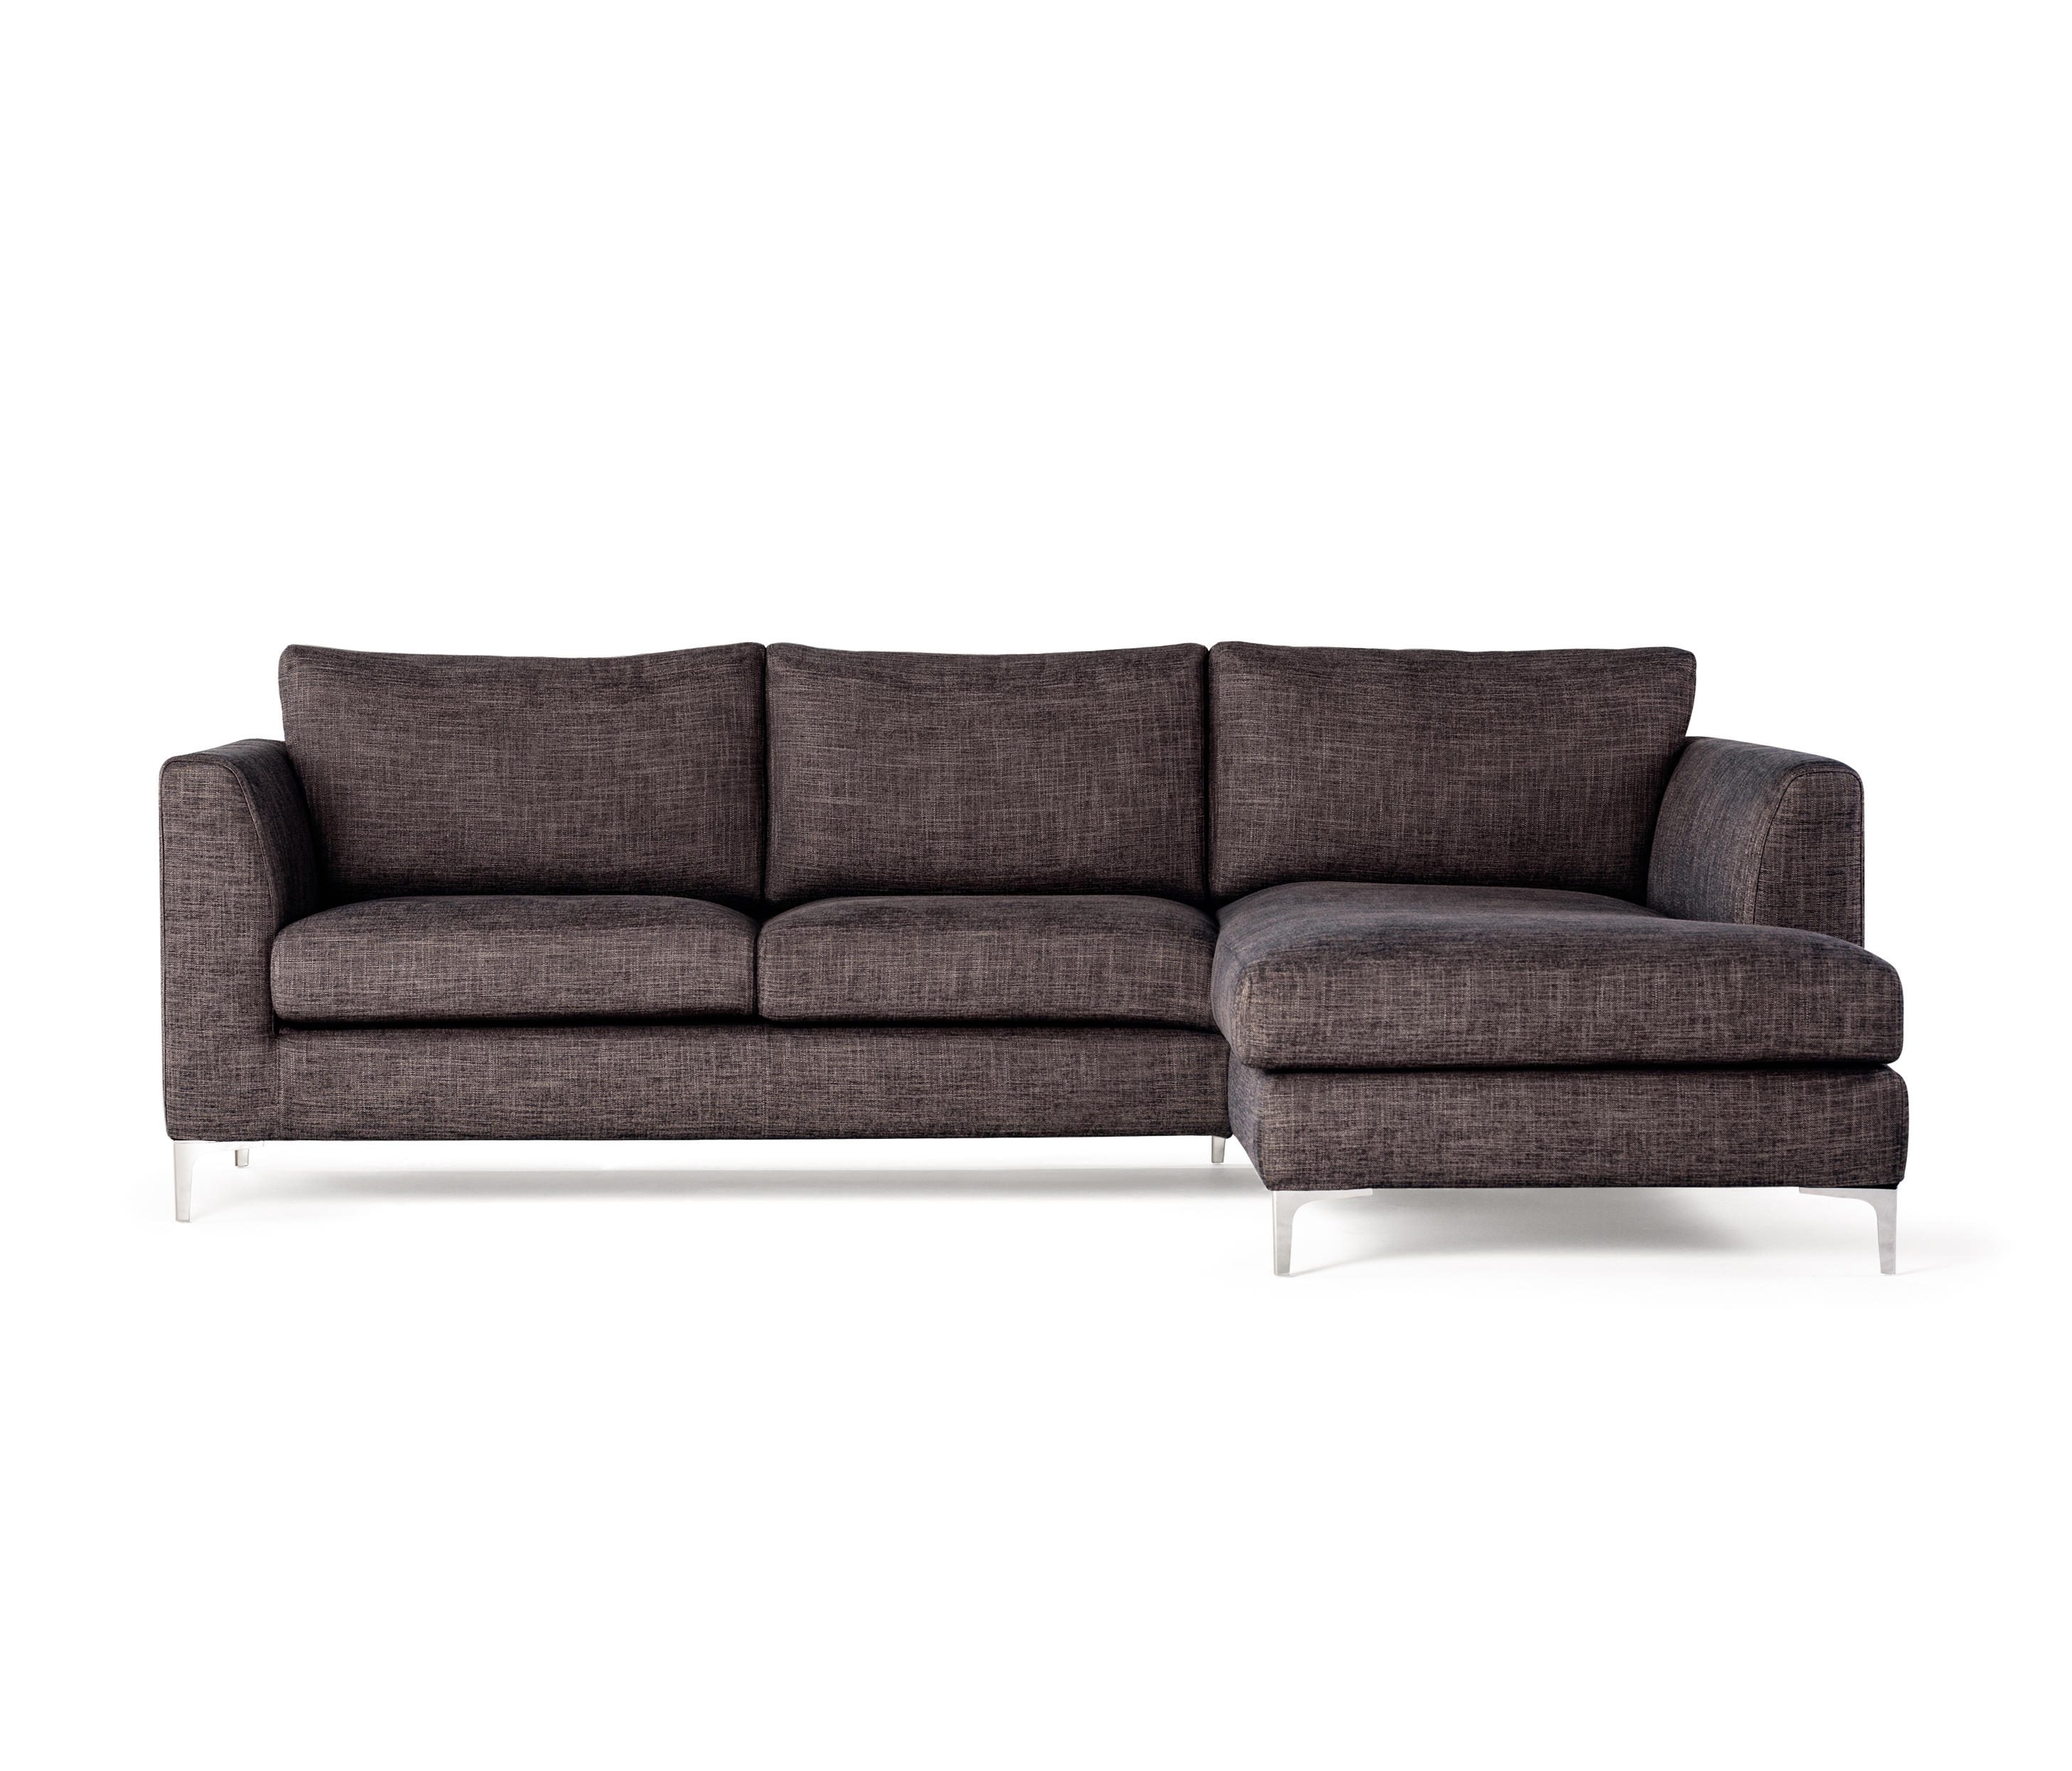 BASIC SOFA Modular sofa systems from Prostoria